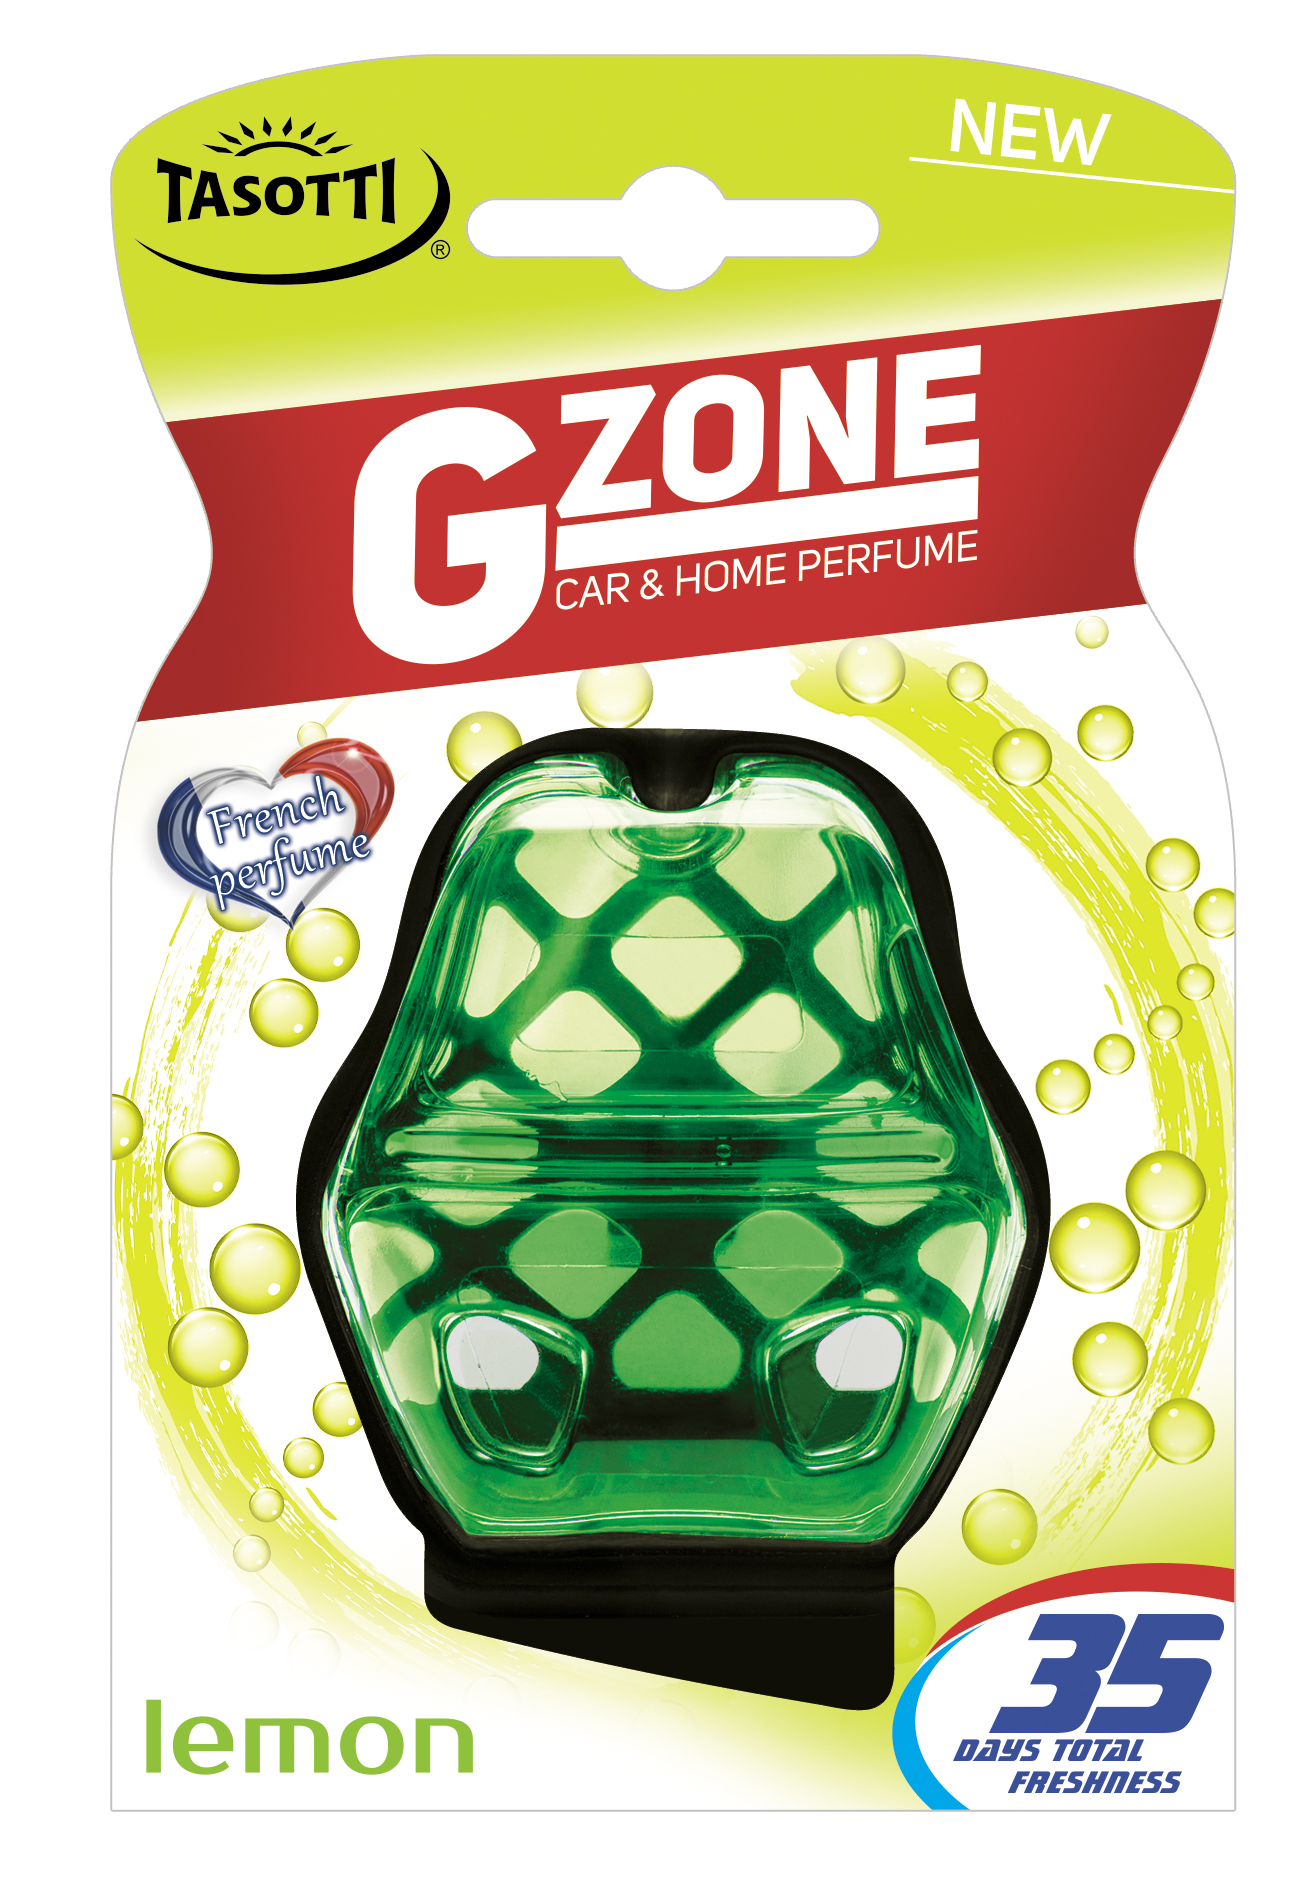 GZone - Lemon